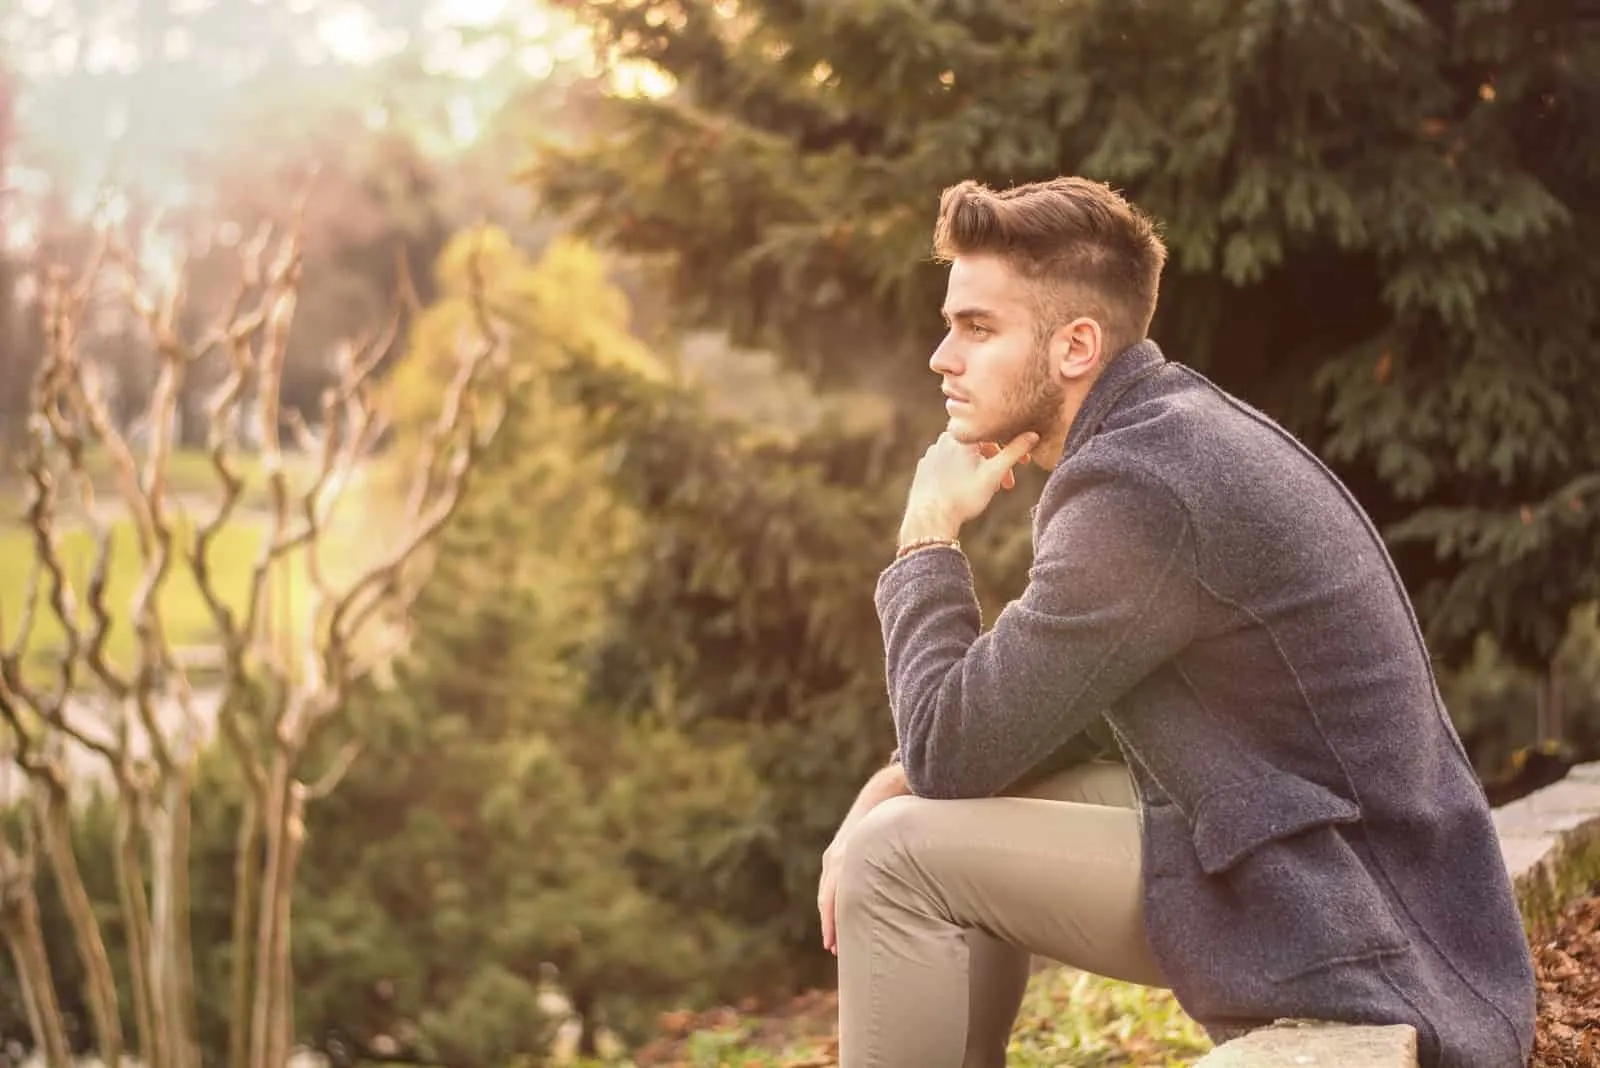 pensive man in gray jacket sitting outdoor